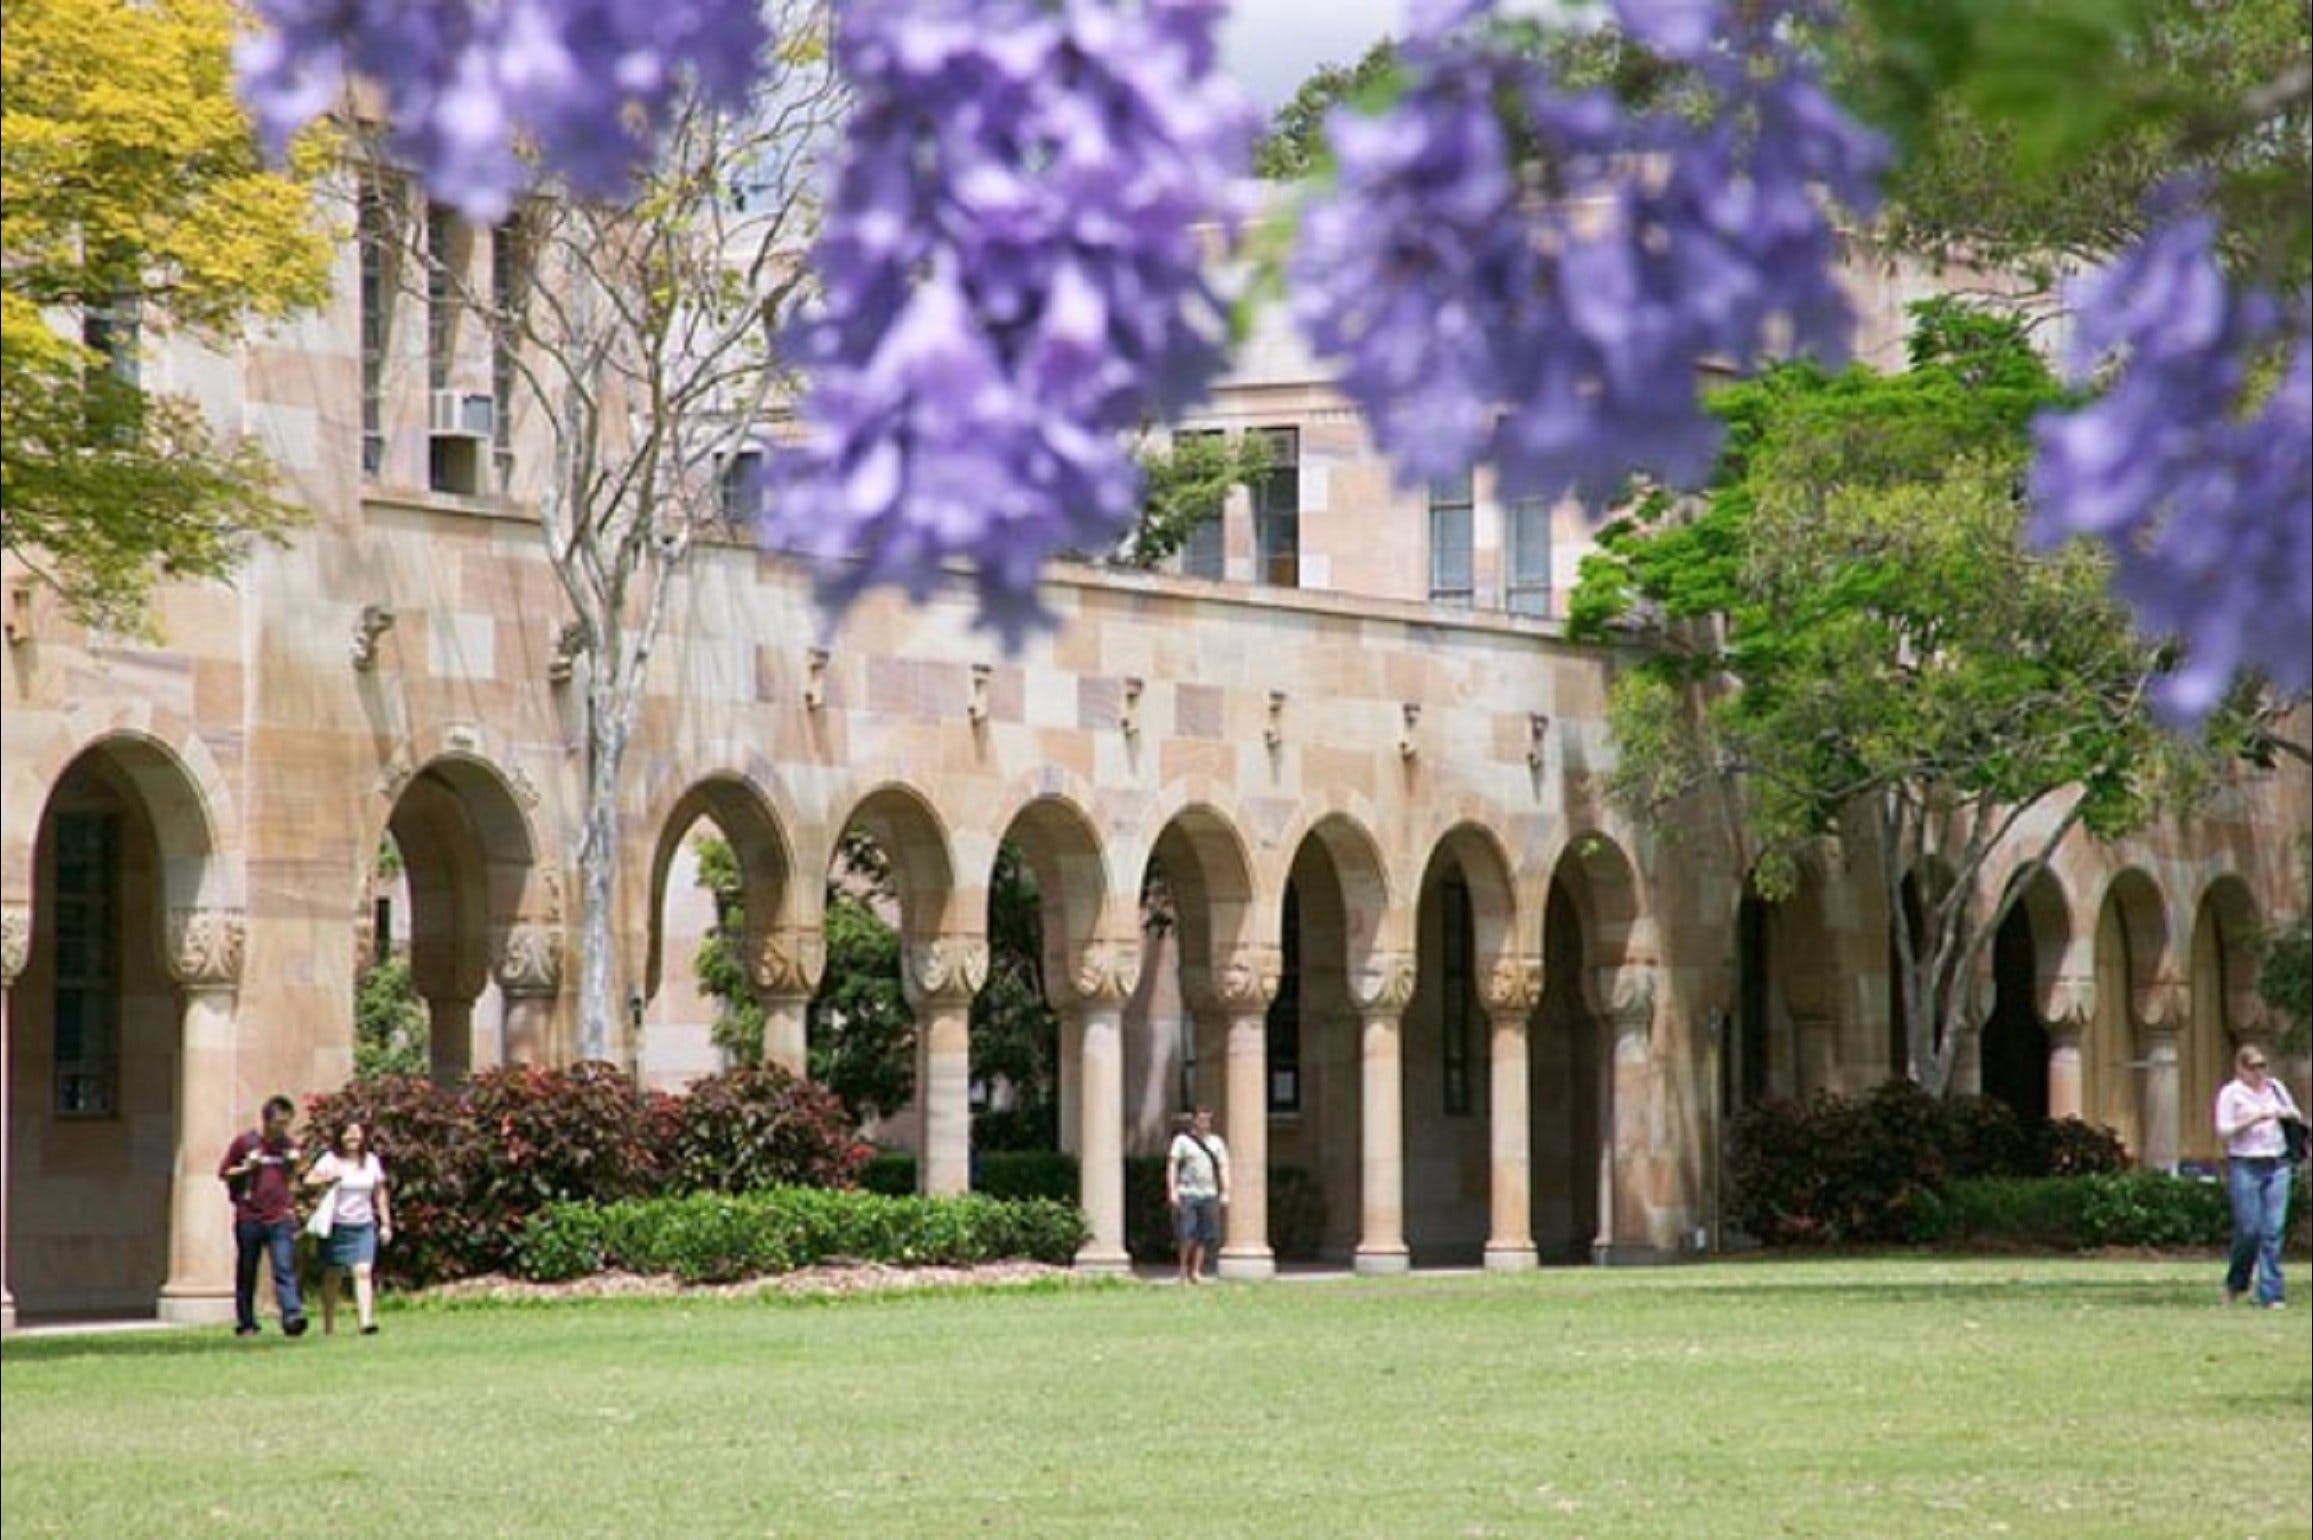 The University of Queensland - Find Attractions